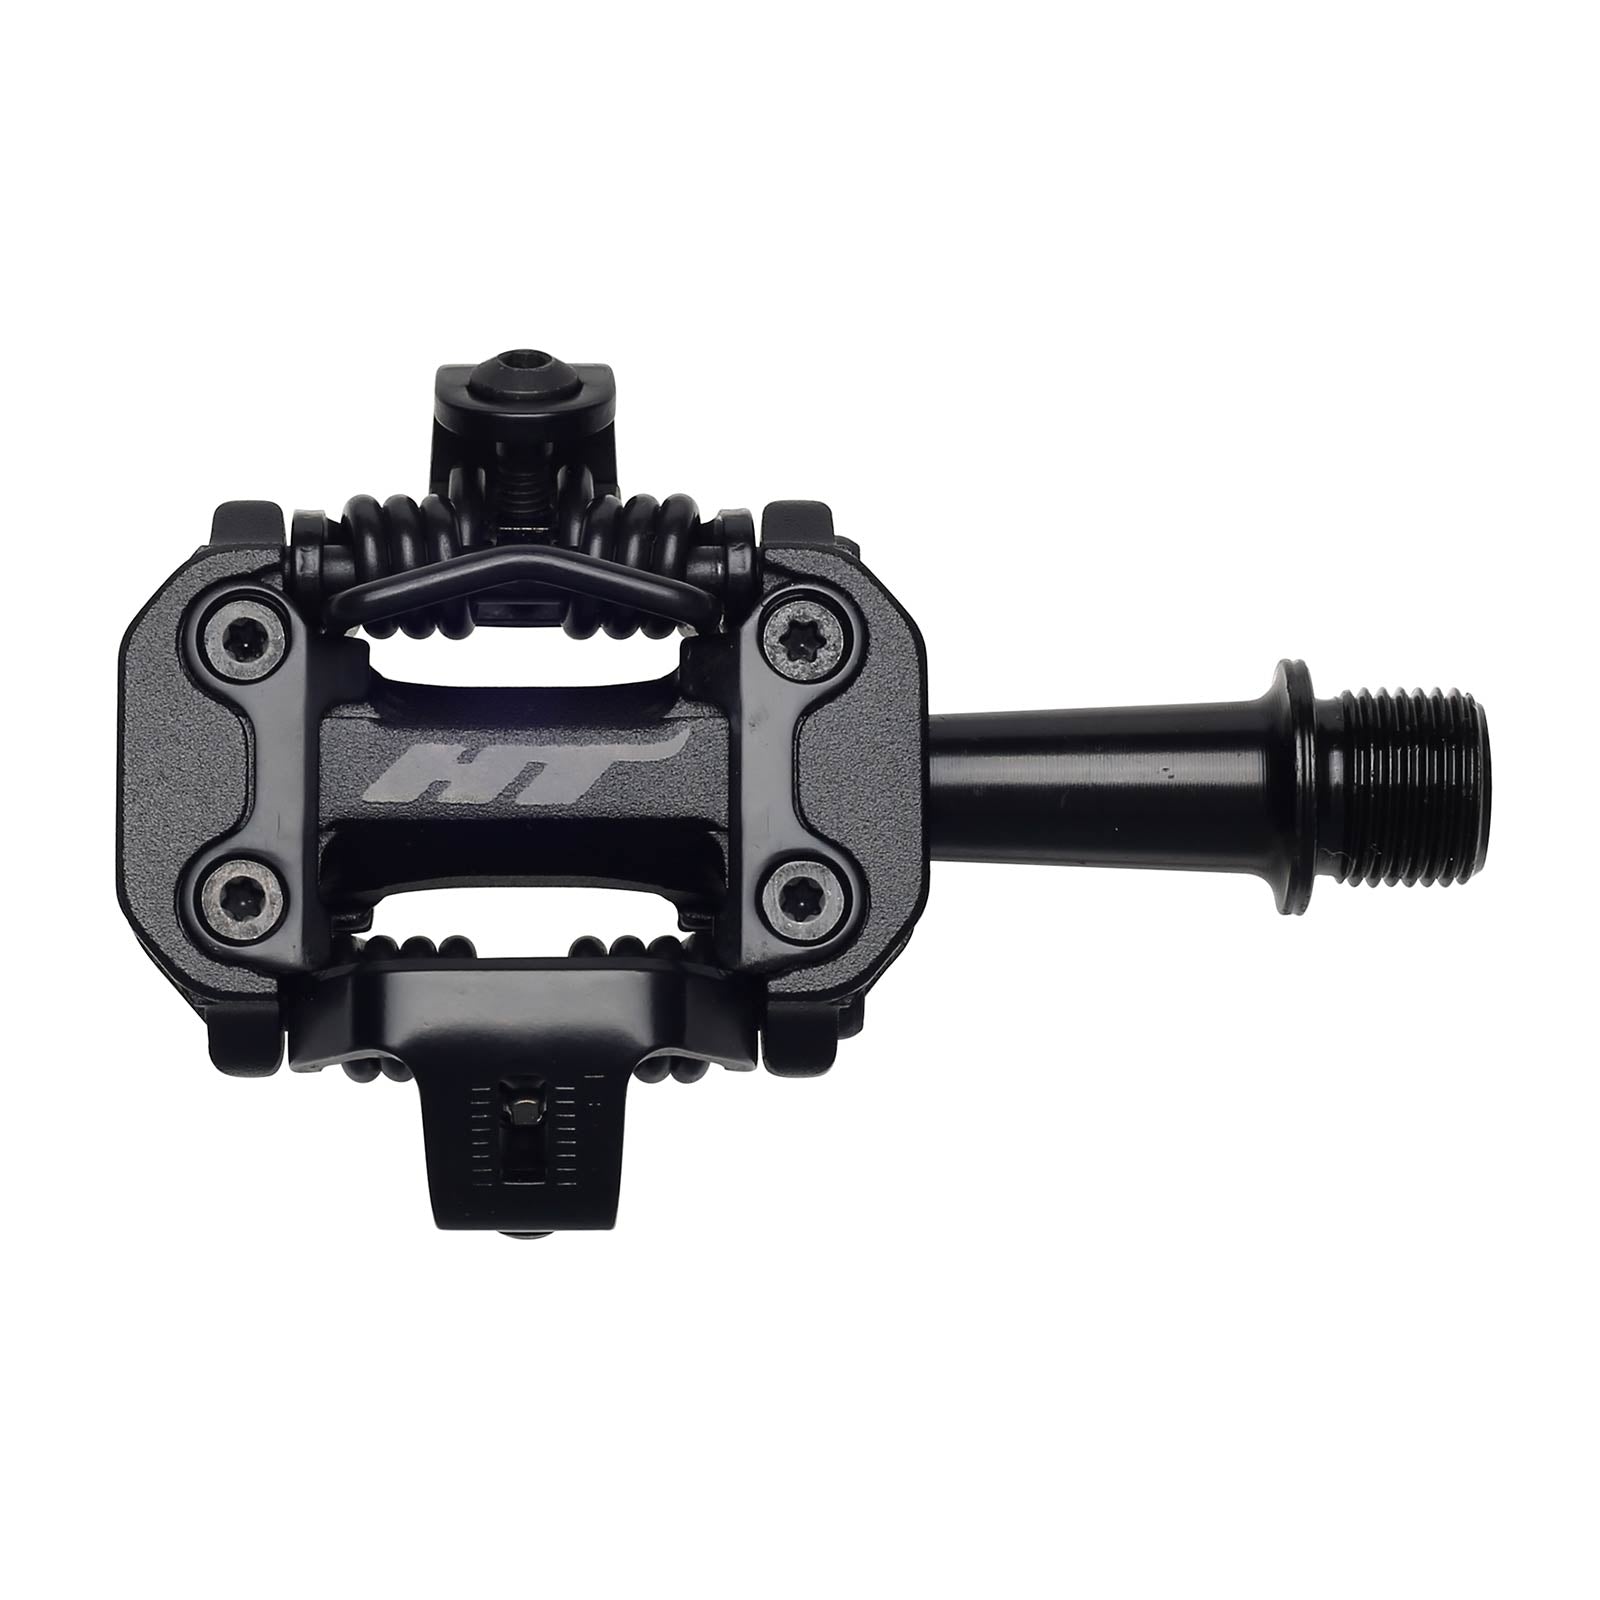 Ht M2 Pedals Alloy / CNC CRMO - Stealth Black